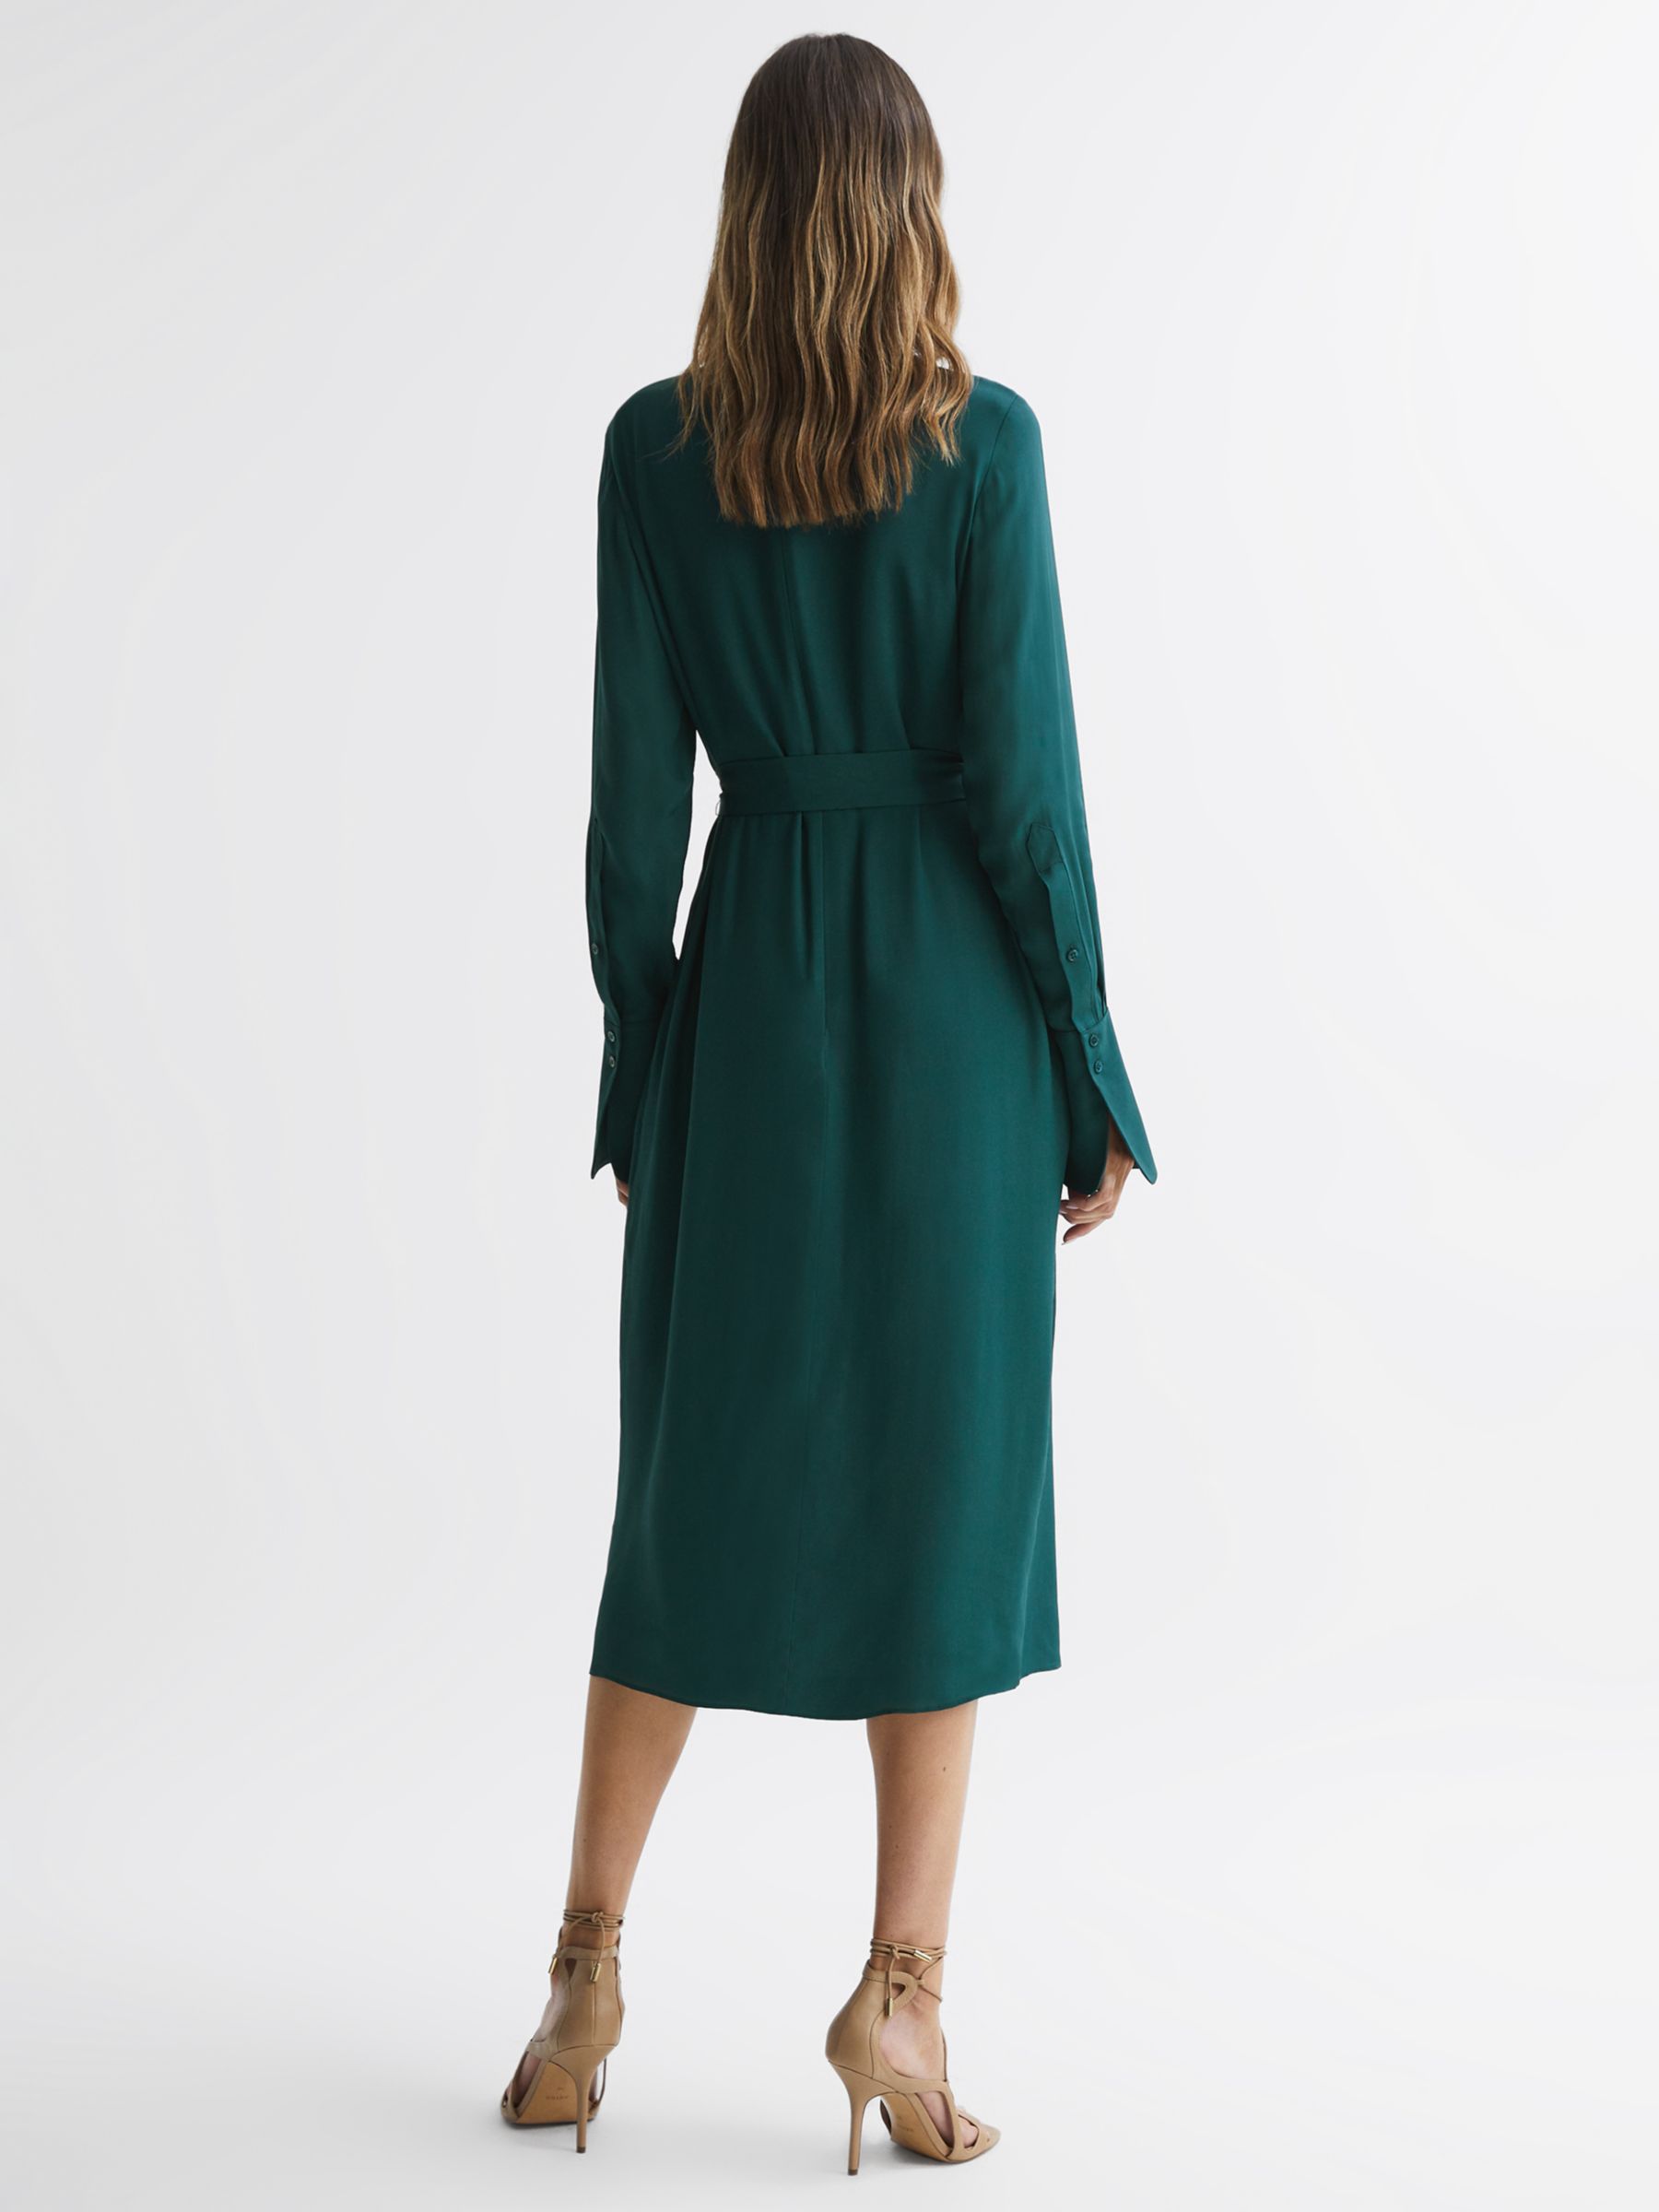 Reiss Phoenix Plain Pleated Midi Dress, Green at John Lewis & Partners